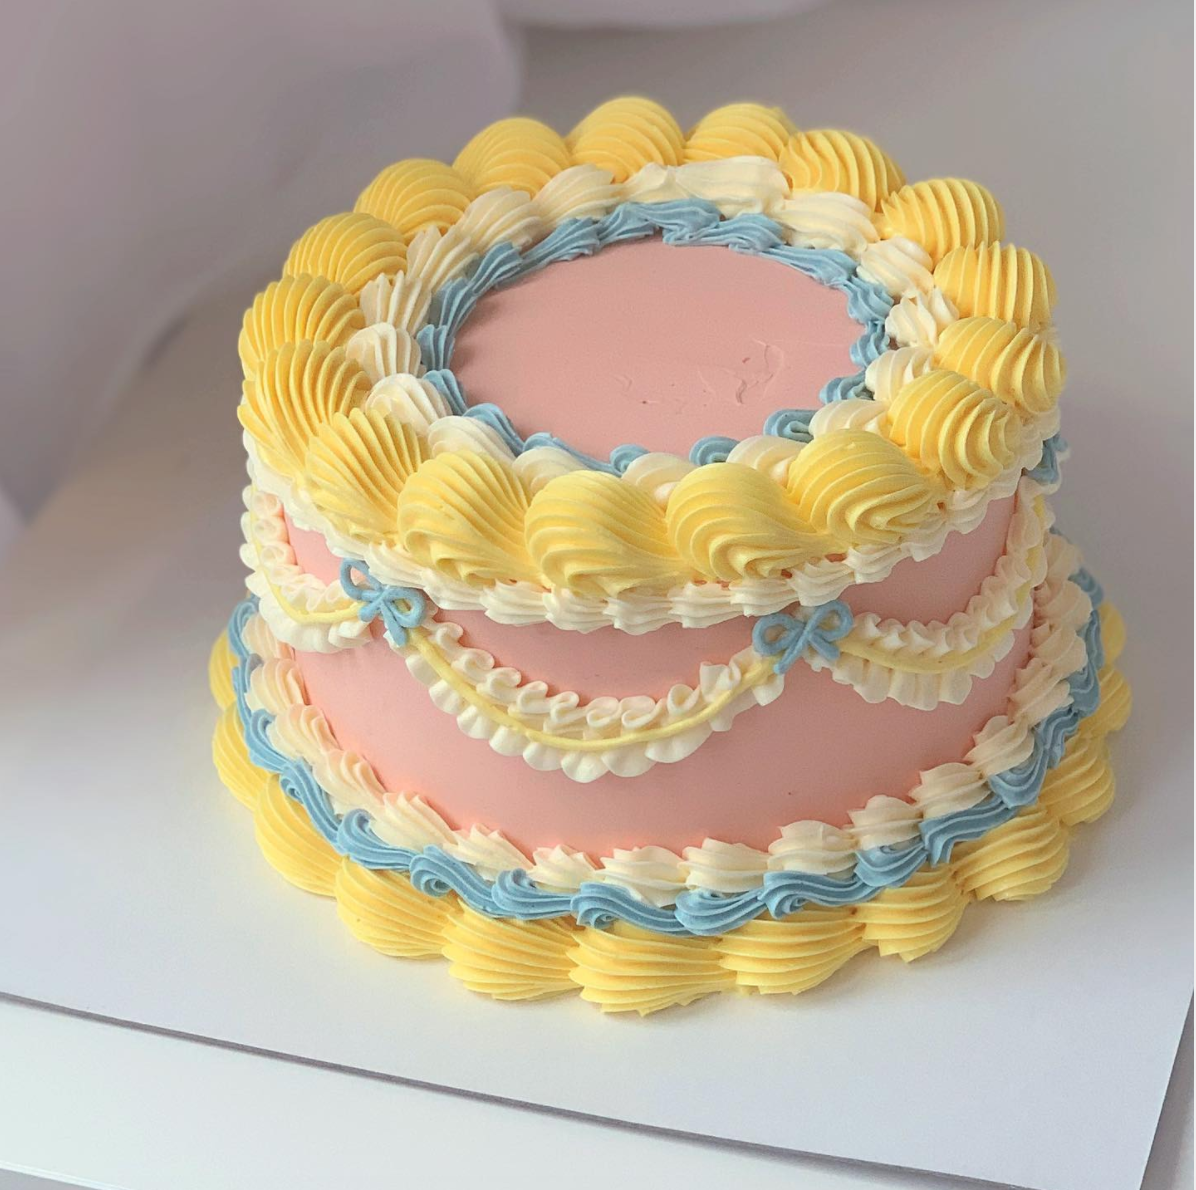 2022 Birthday Cake Trends | LoveCrafts